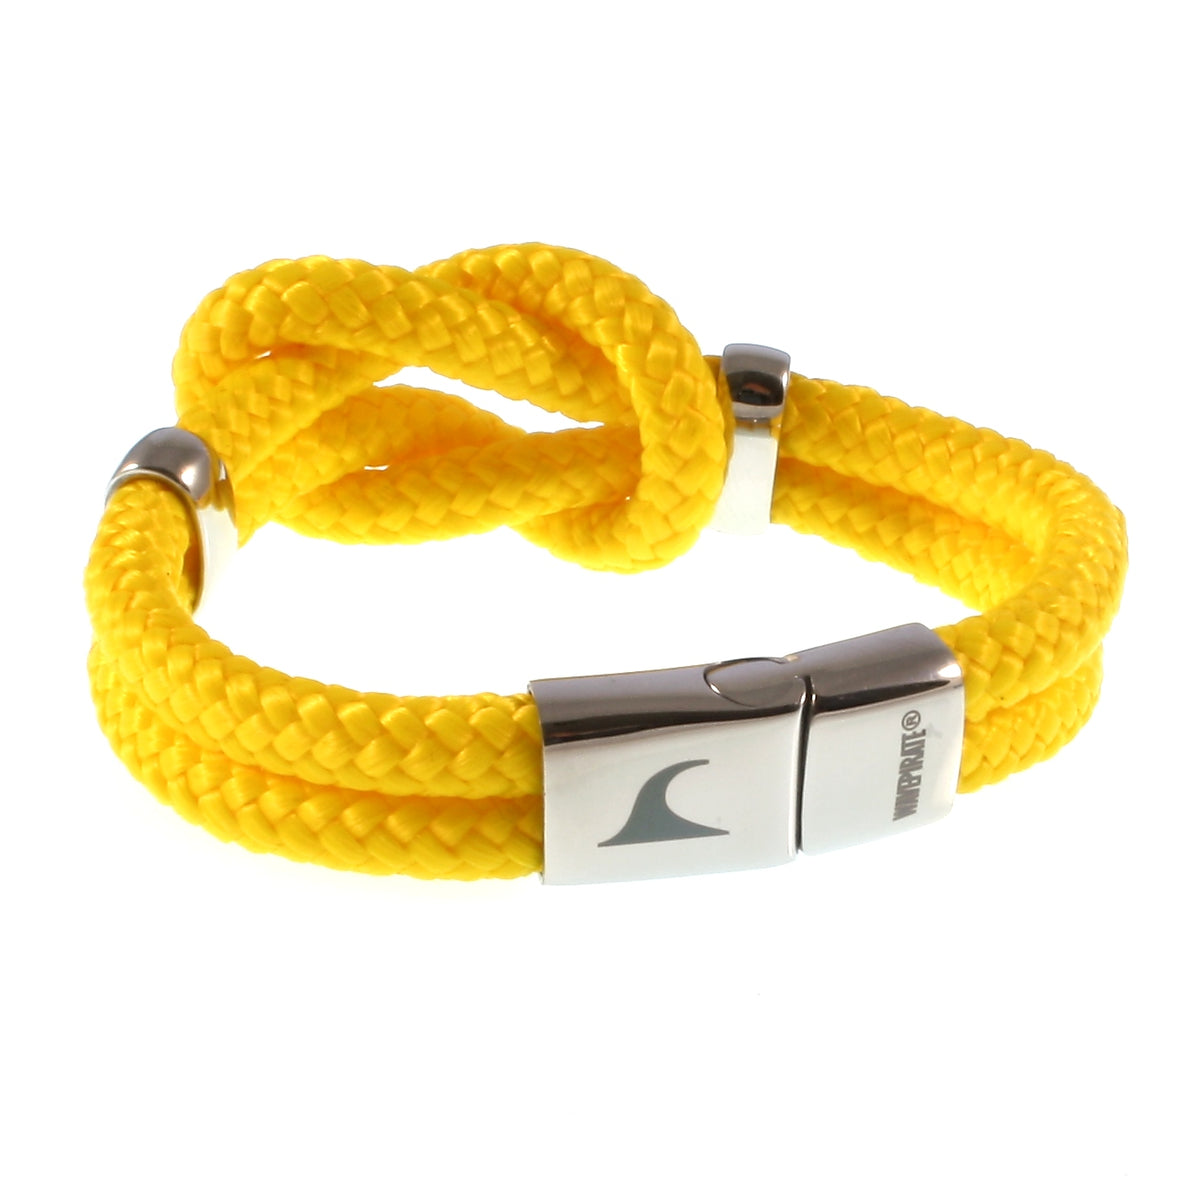 Damen-Segeltau-armband-pure-gelb-silber-geflochten-Edelstahlverschluss-hinten-wavepirate-shop-st